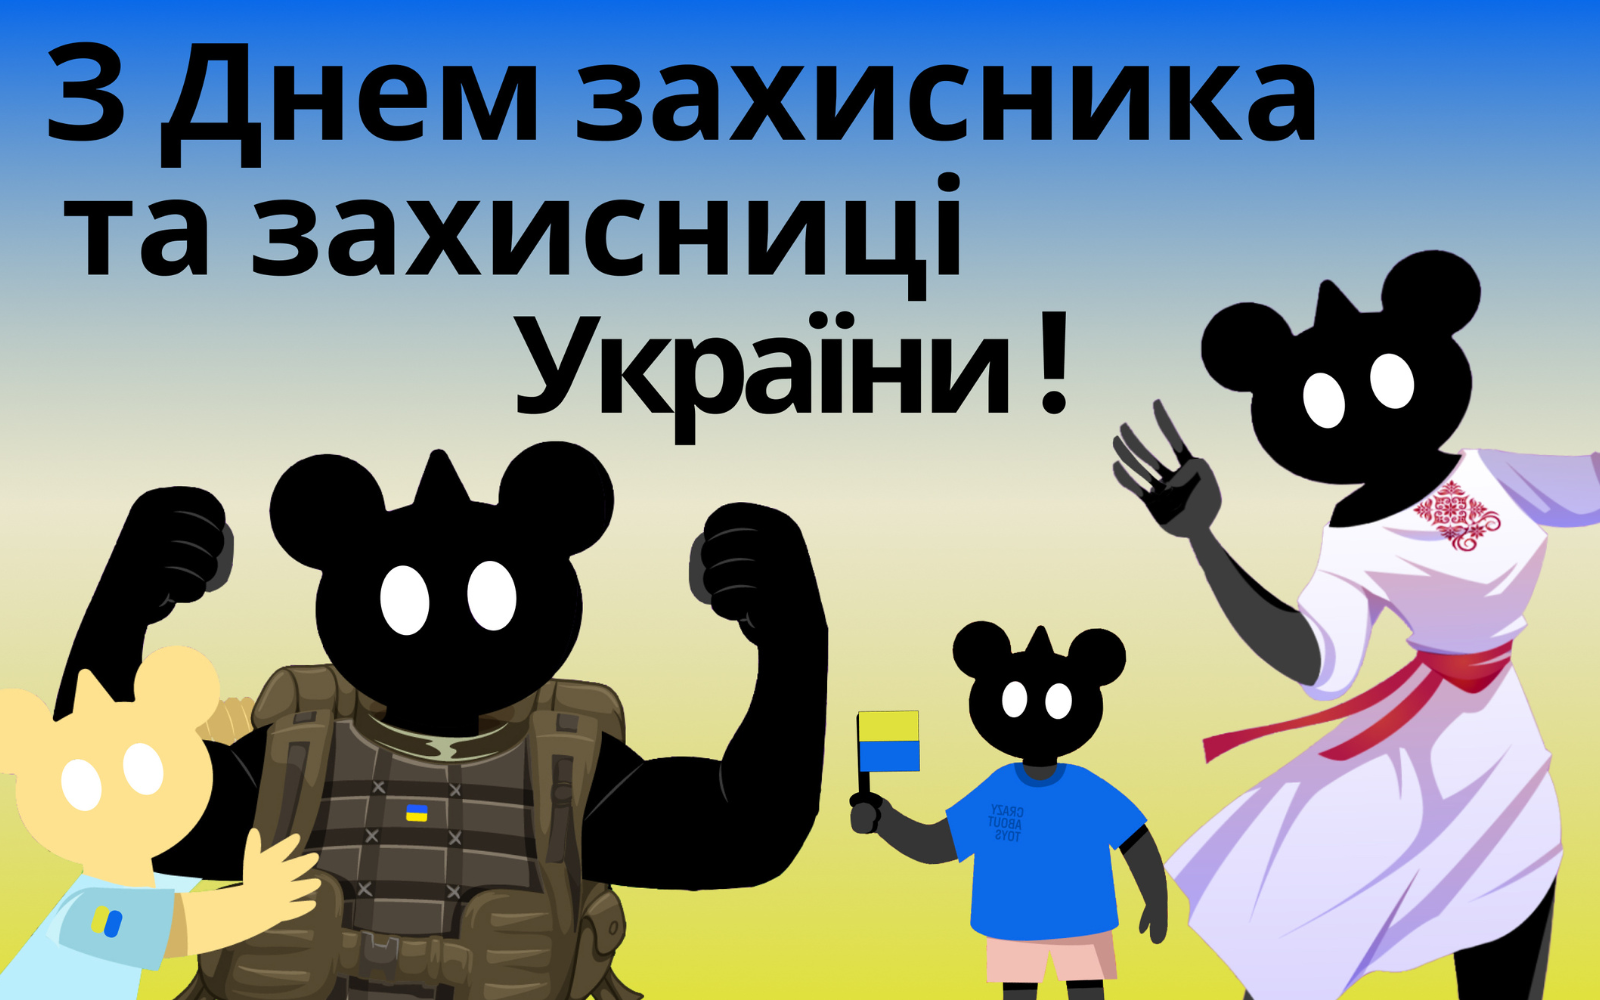 Happy Day of Defenders of Ukraine